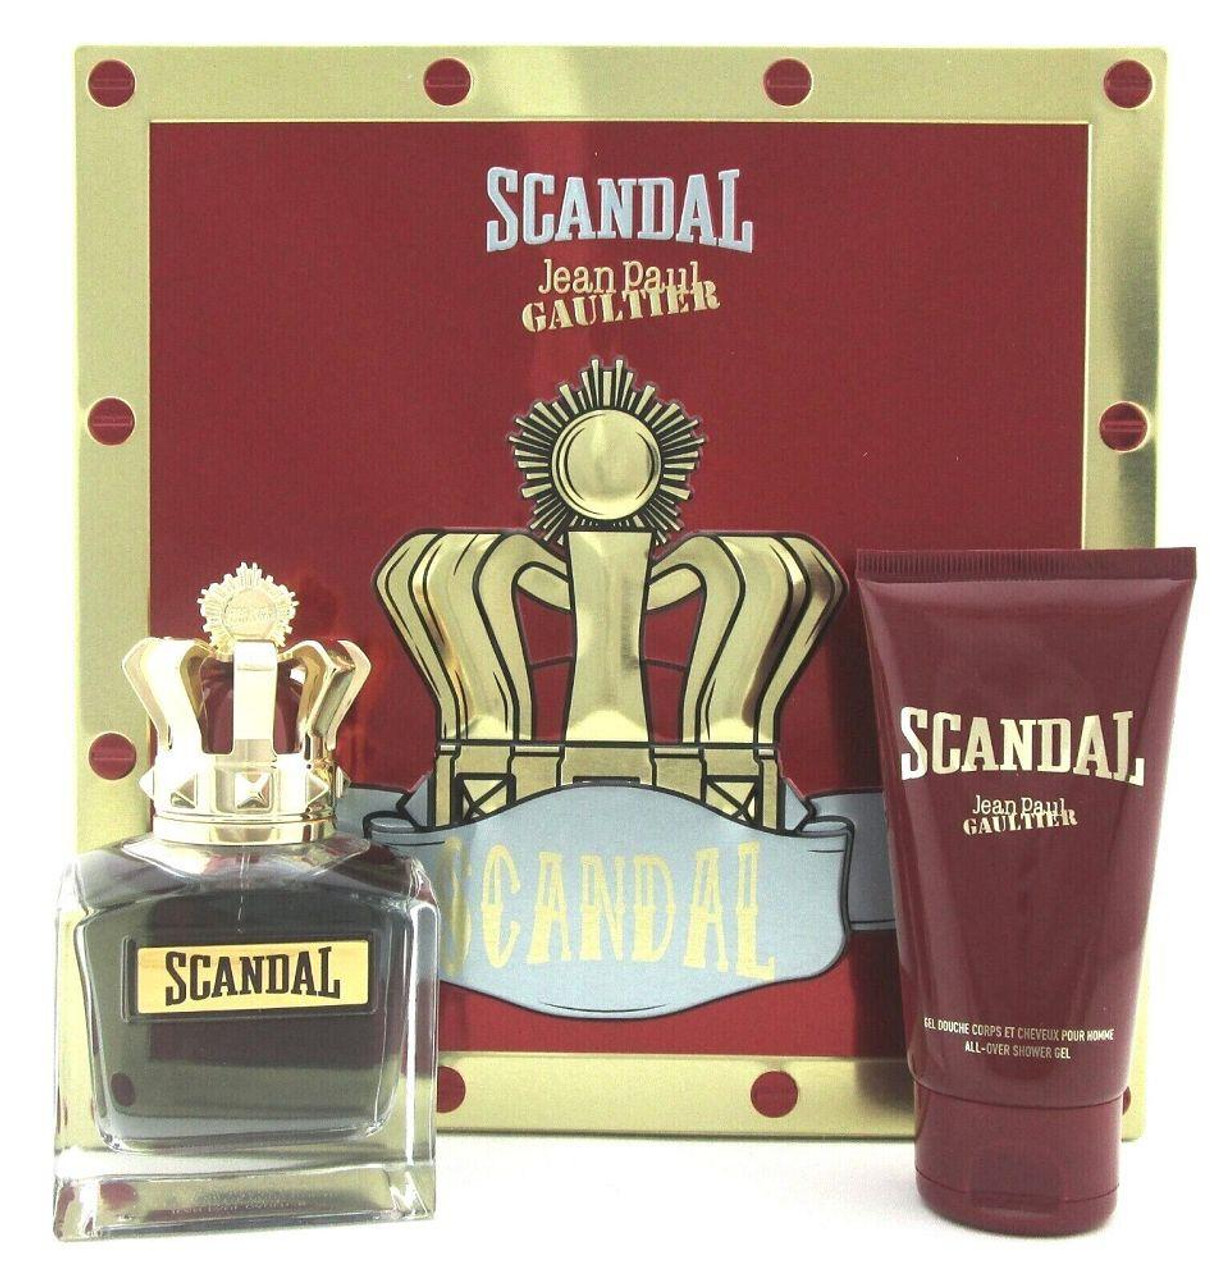 Scandal Pour Homme Jean Paul Gaultier cologne - a fragrance for men 2021